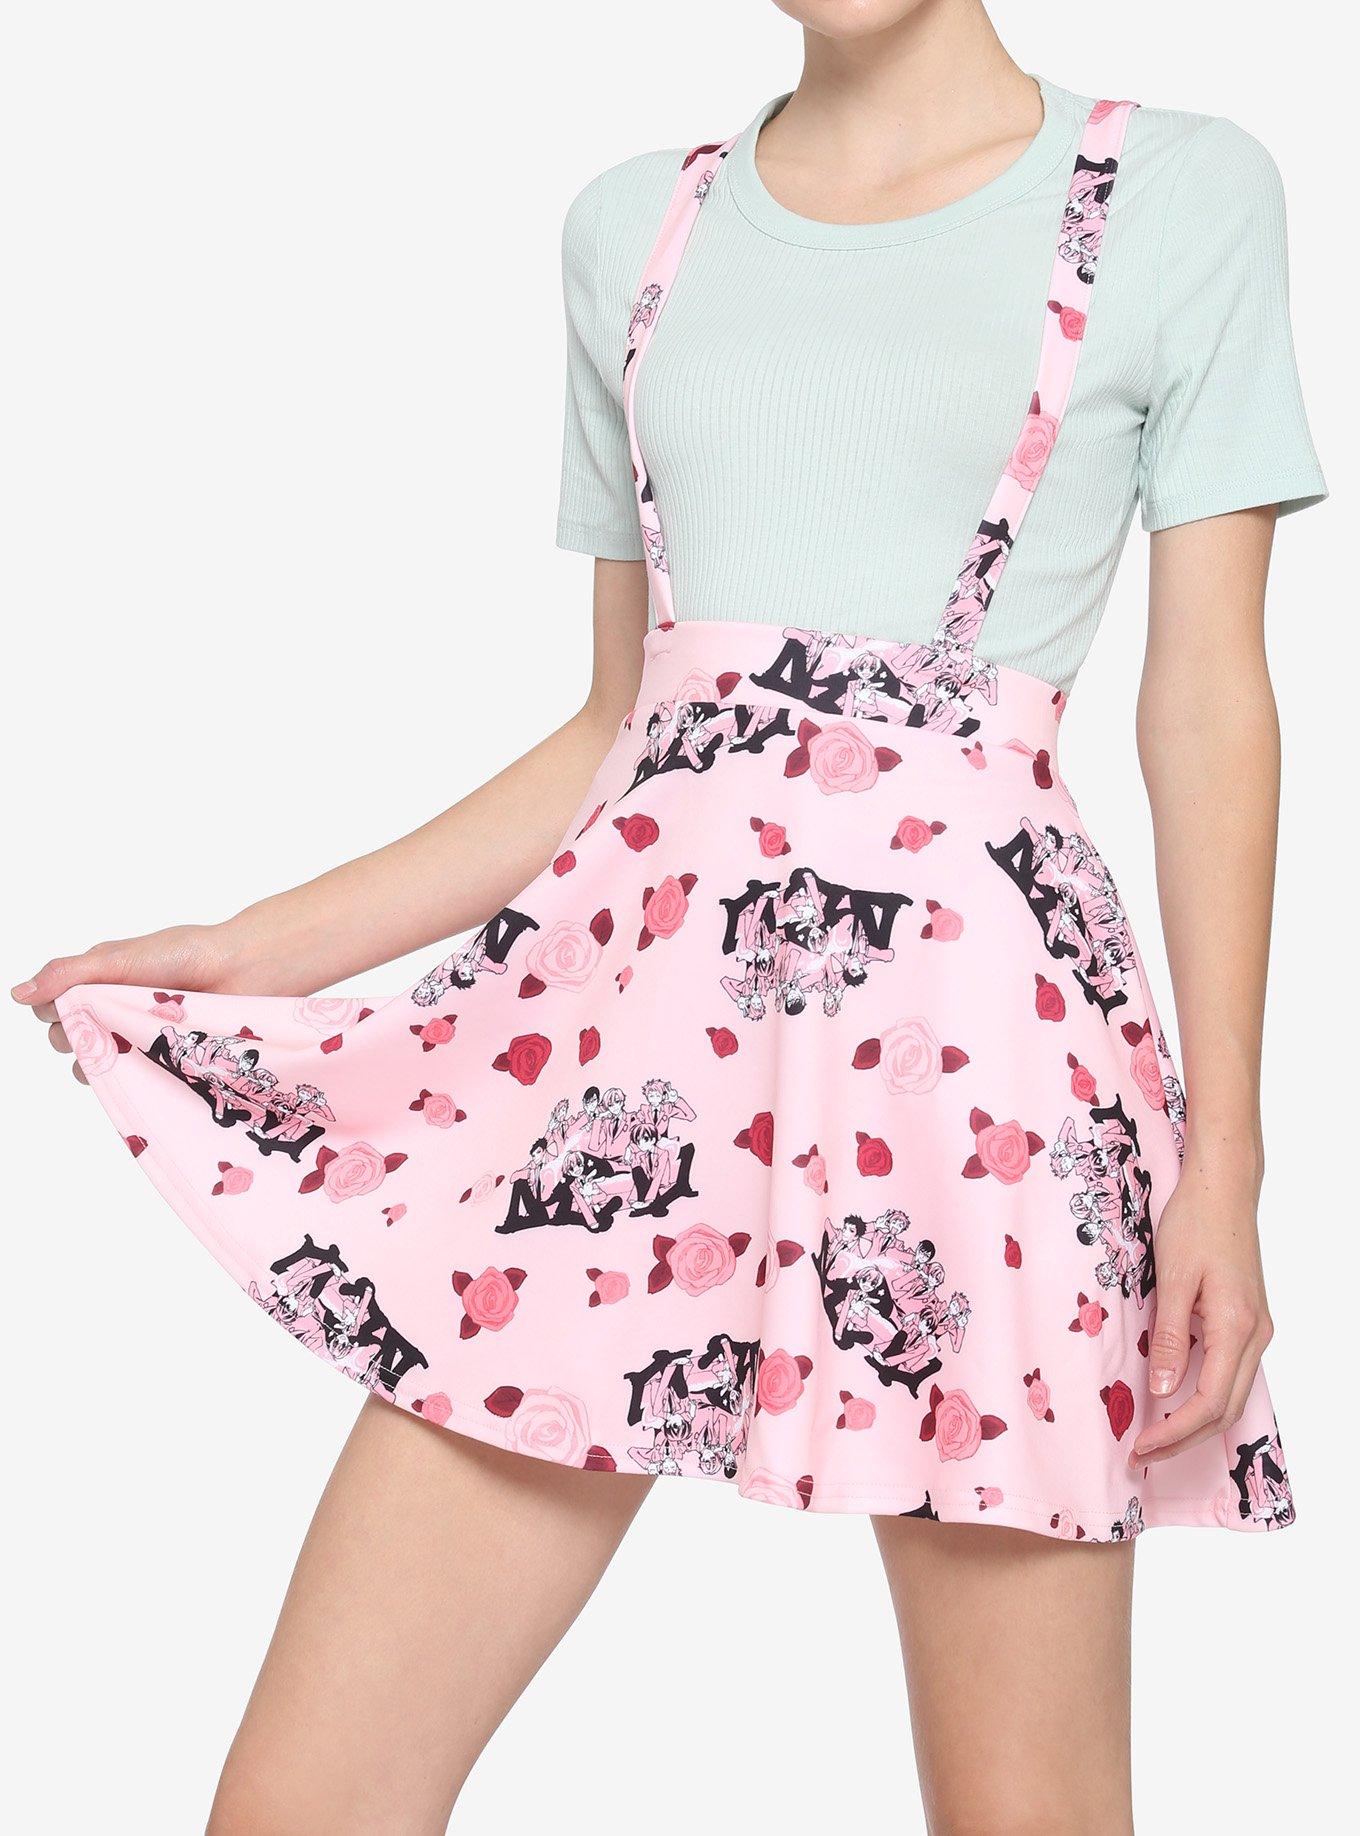 Ouran High School Host Club Roses Suspender Skirt, PINK, hi-res